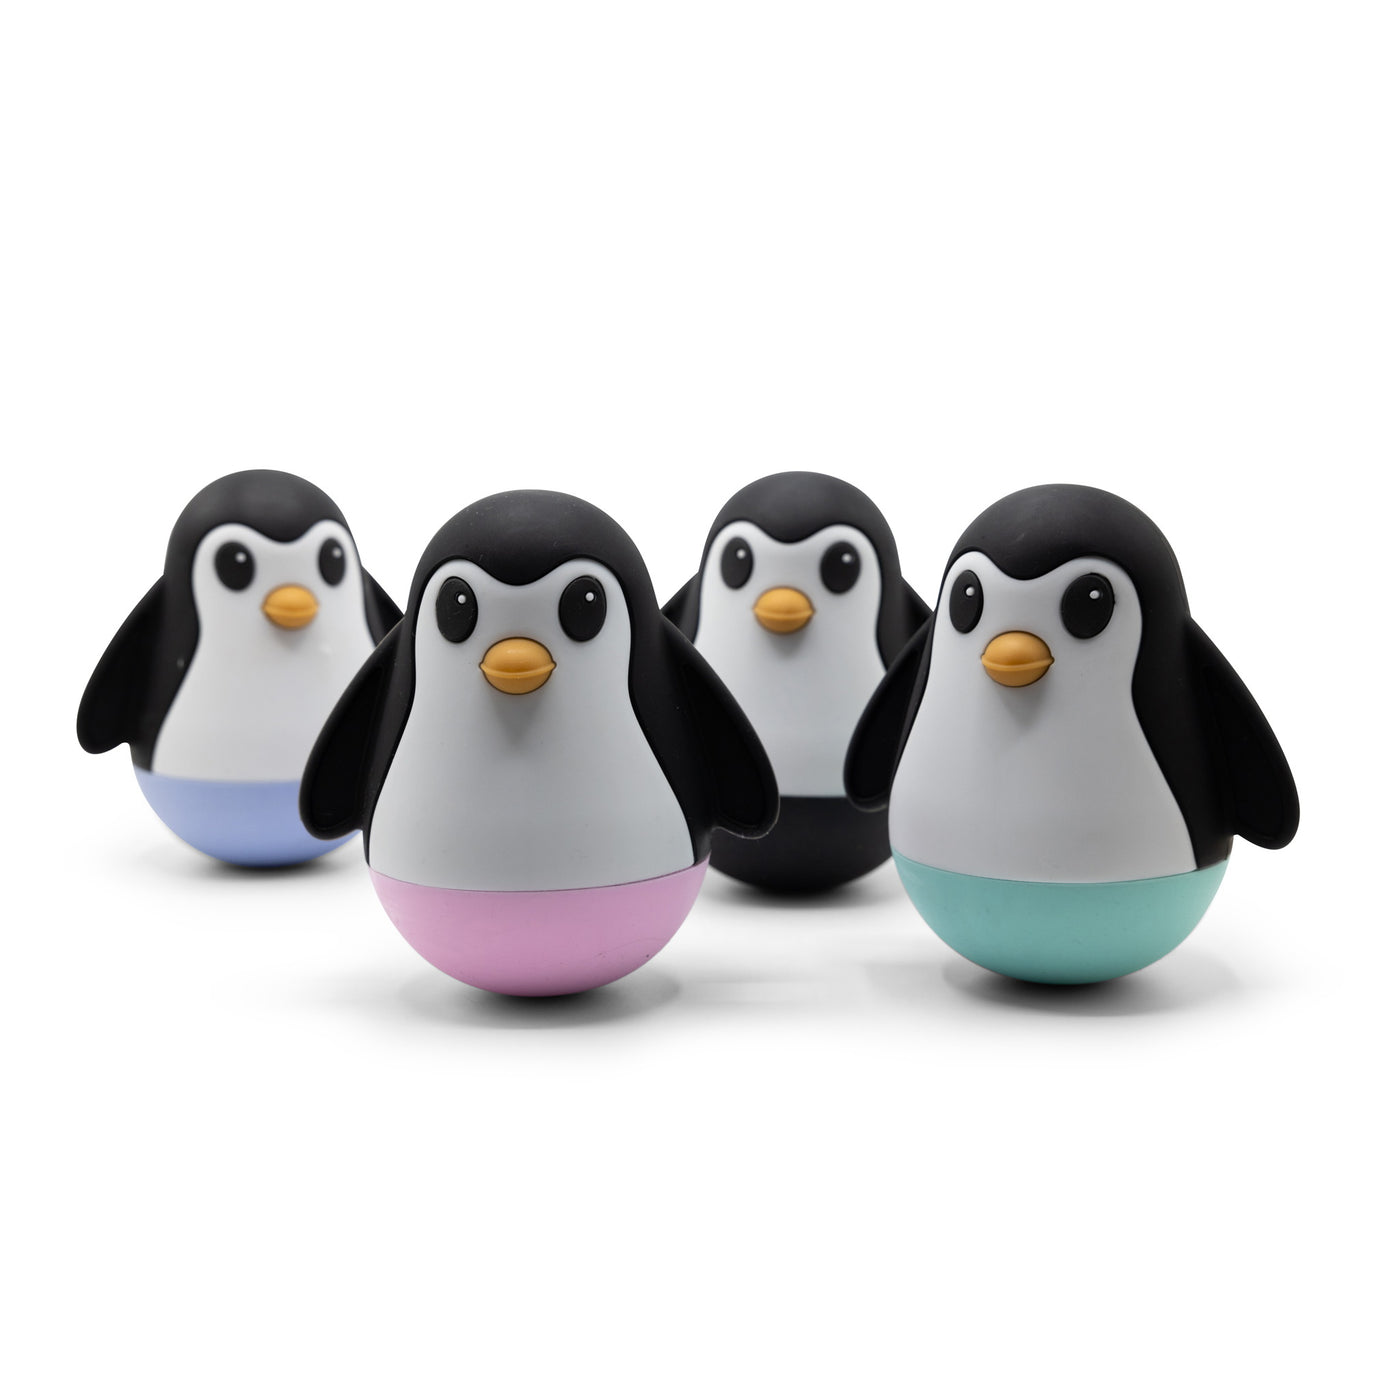 Jellystone Penguin Wobble - All Colours